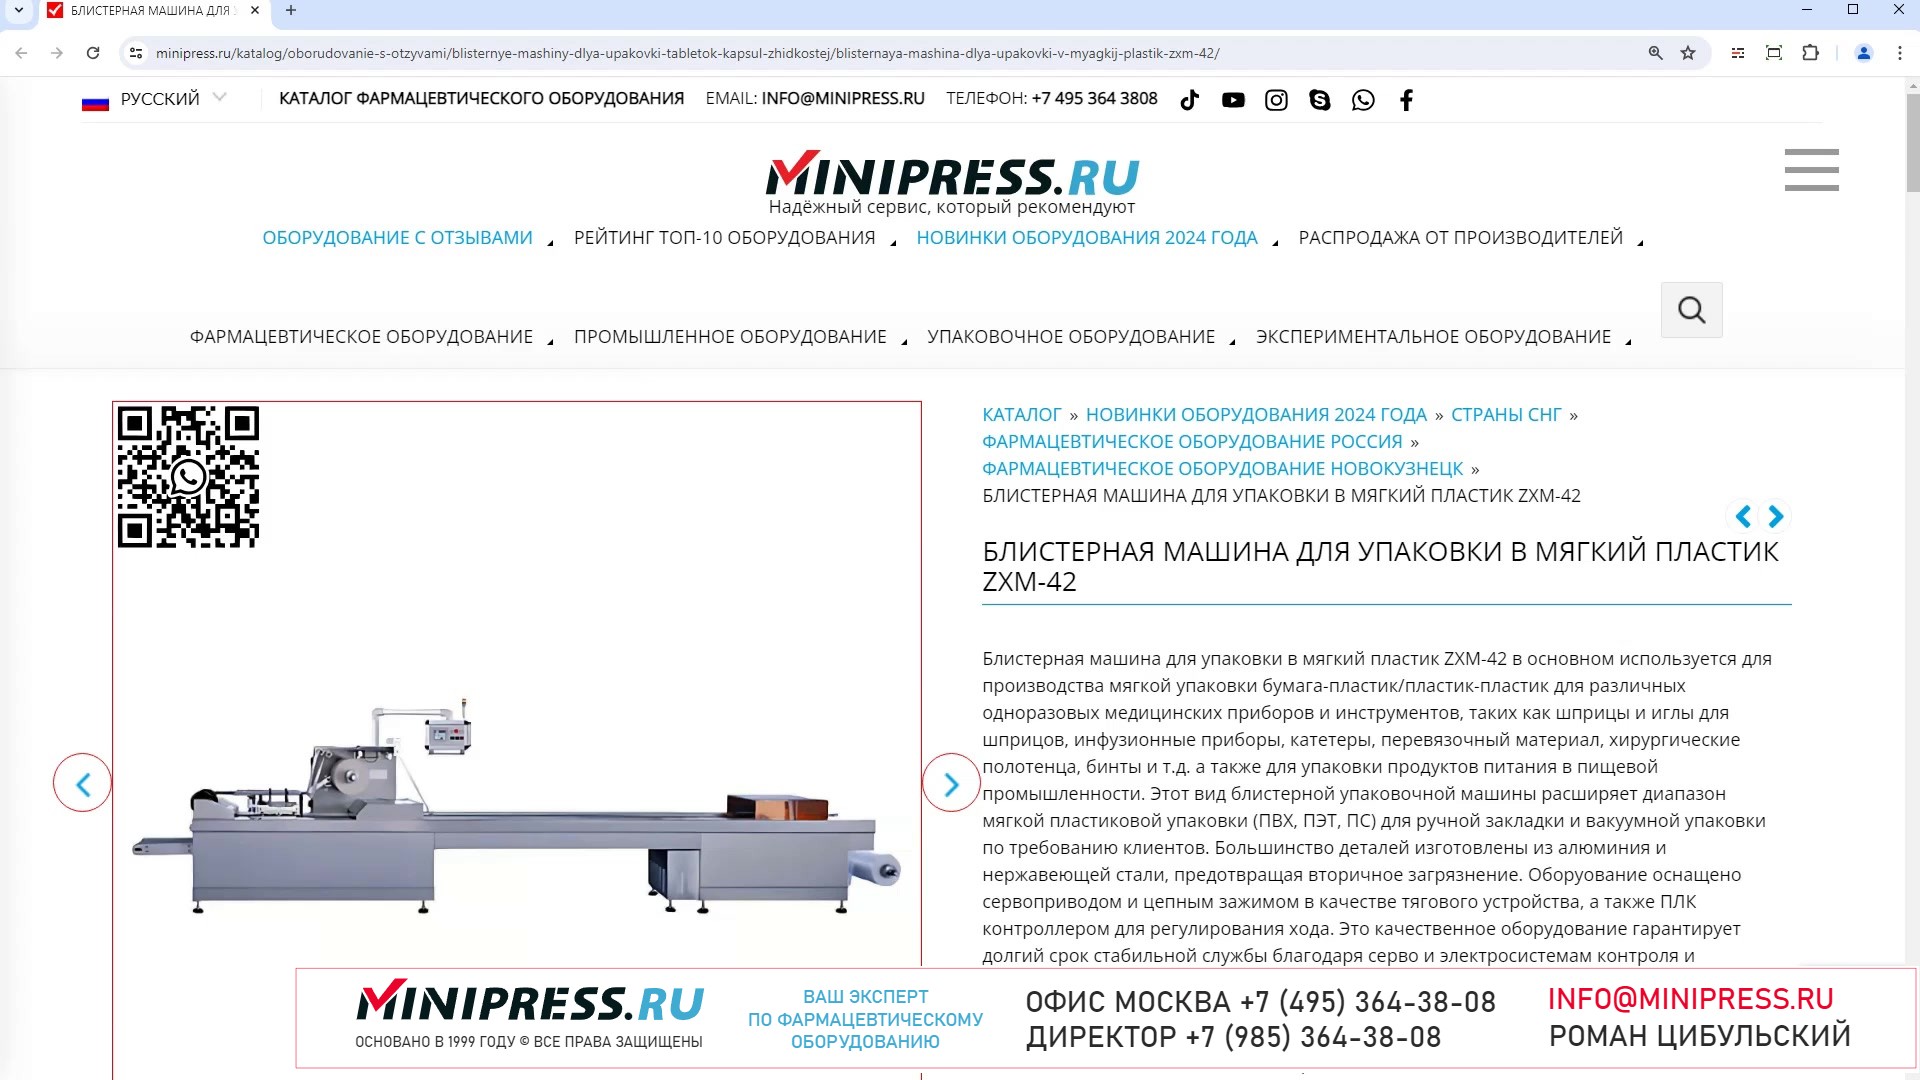 Minipress.ru Блистерная машина для упаковки в мягкий пластик ZXM-42